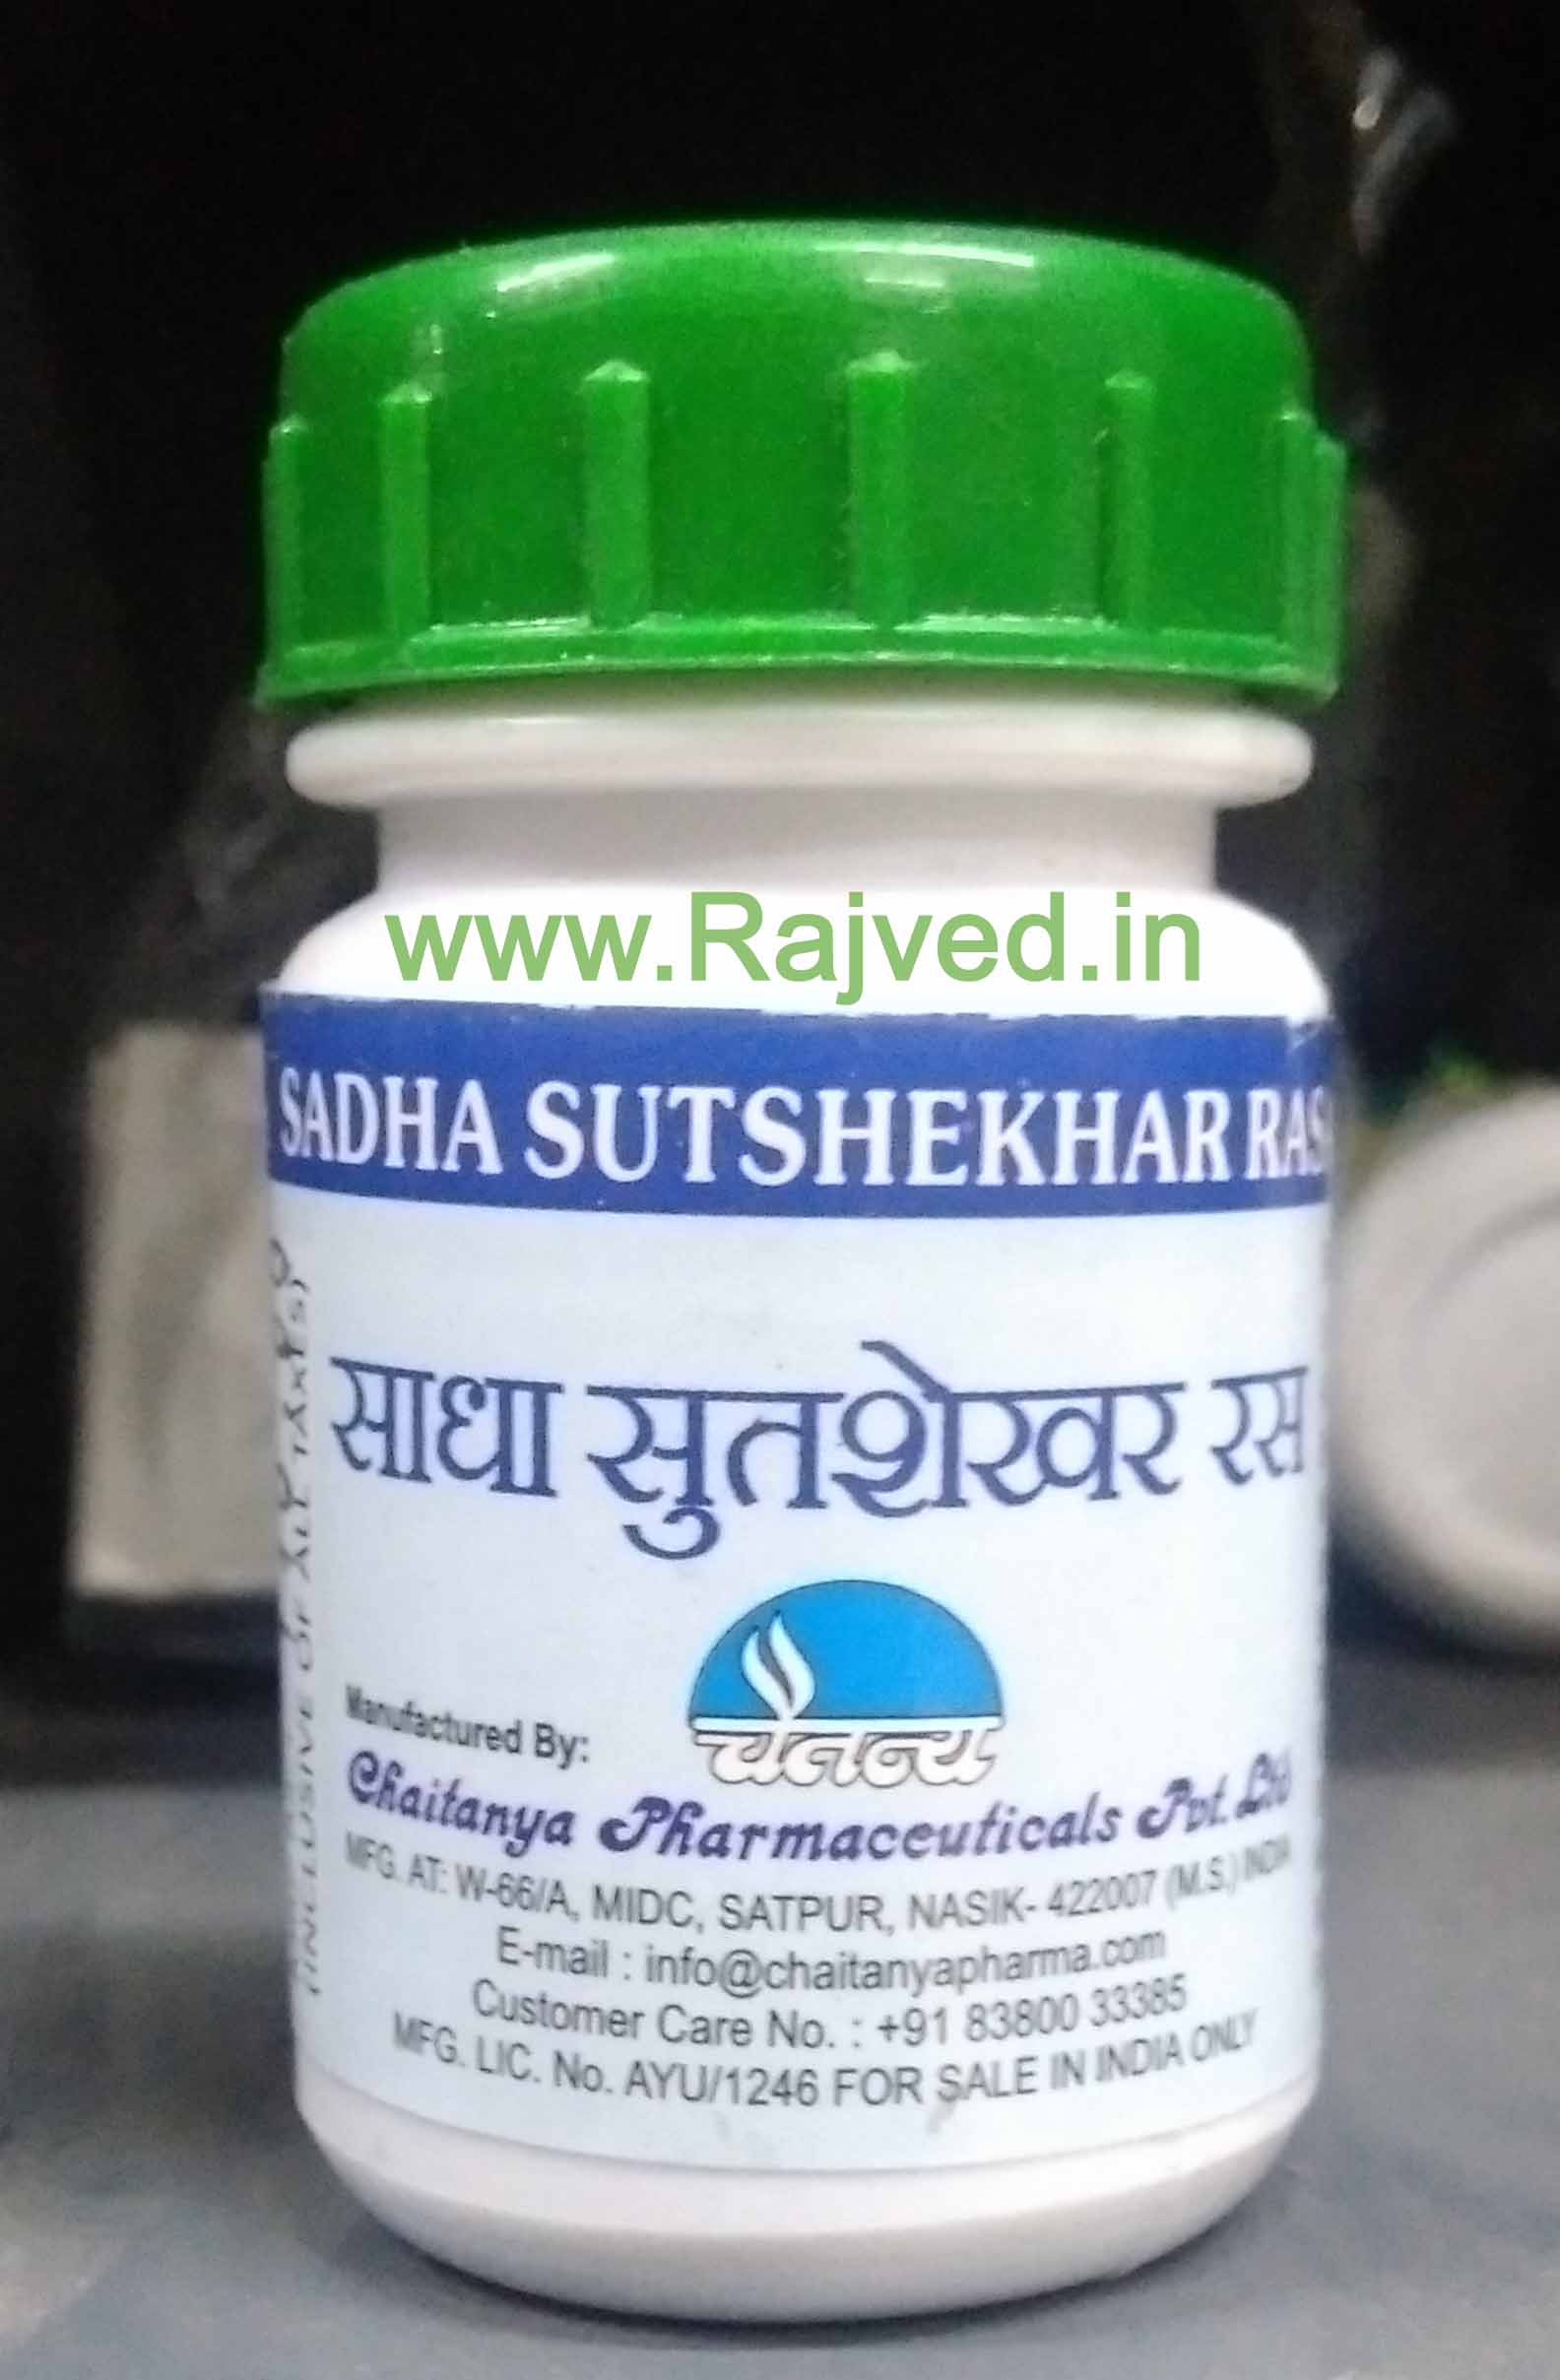 sadha sutshekhar rasa 60tab upto 20% off Chaitanya Pharmaceuticals